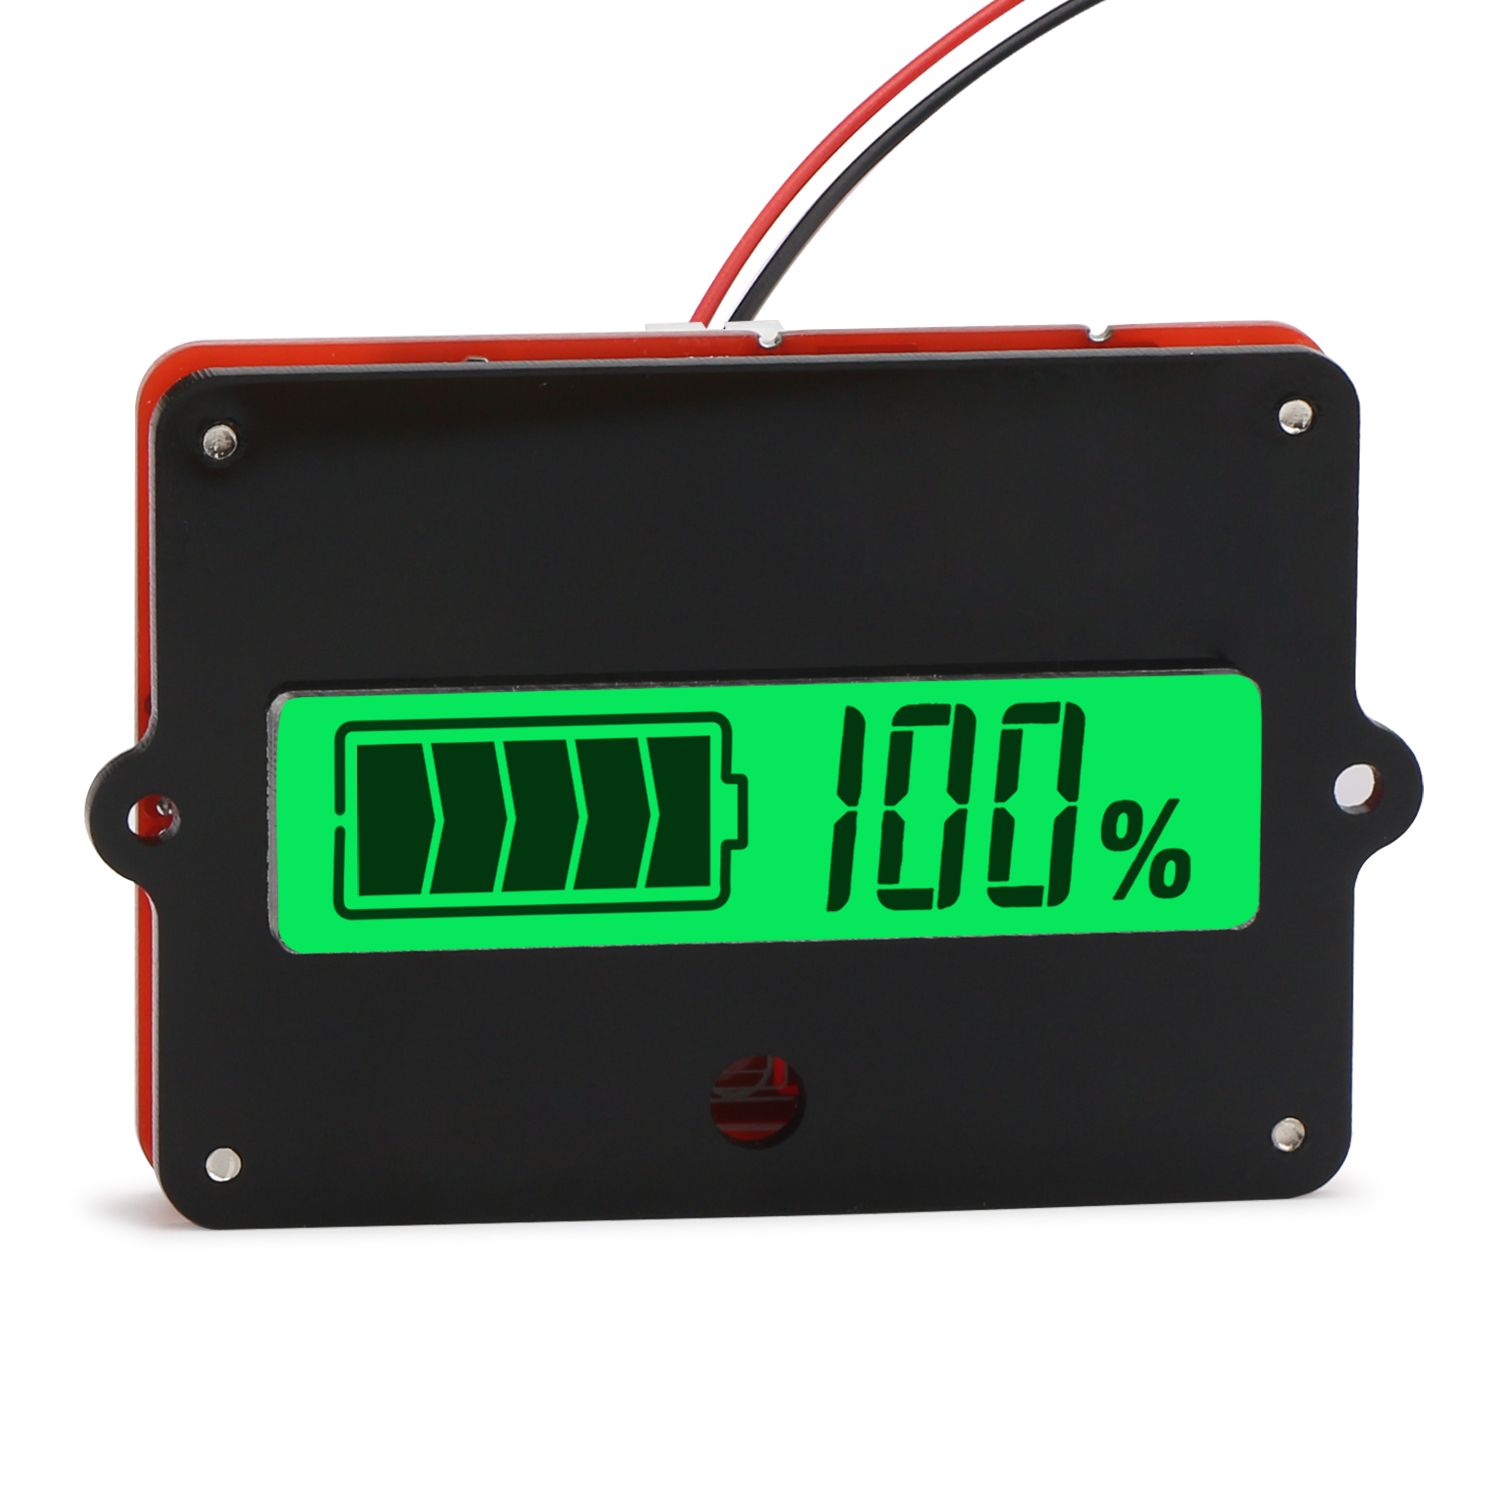 LCD Meter Digital Lead-acid Monitor Battery Tester Voltmeter Capacity Indicator